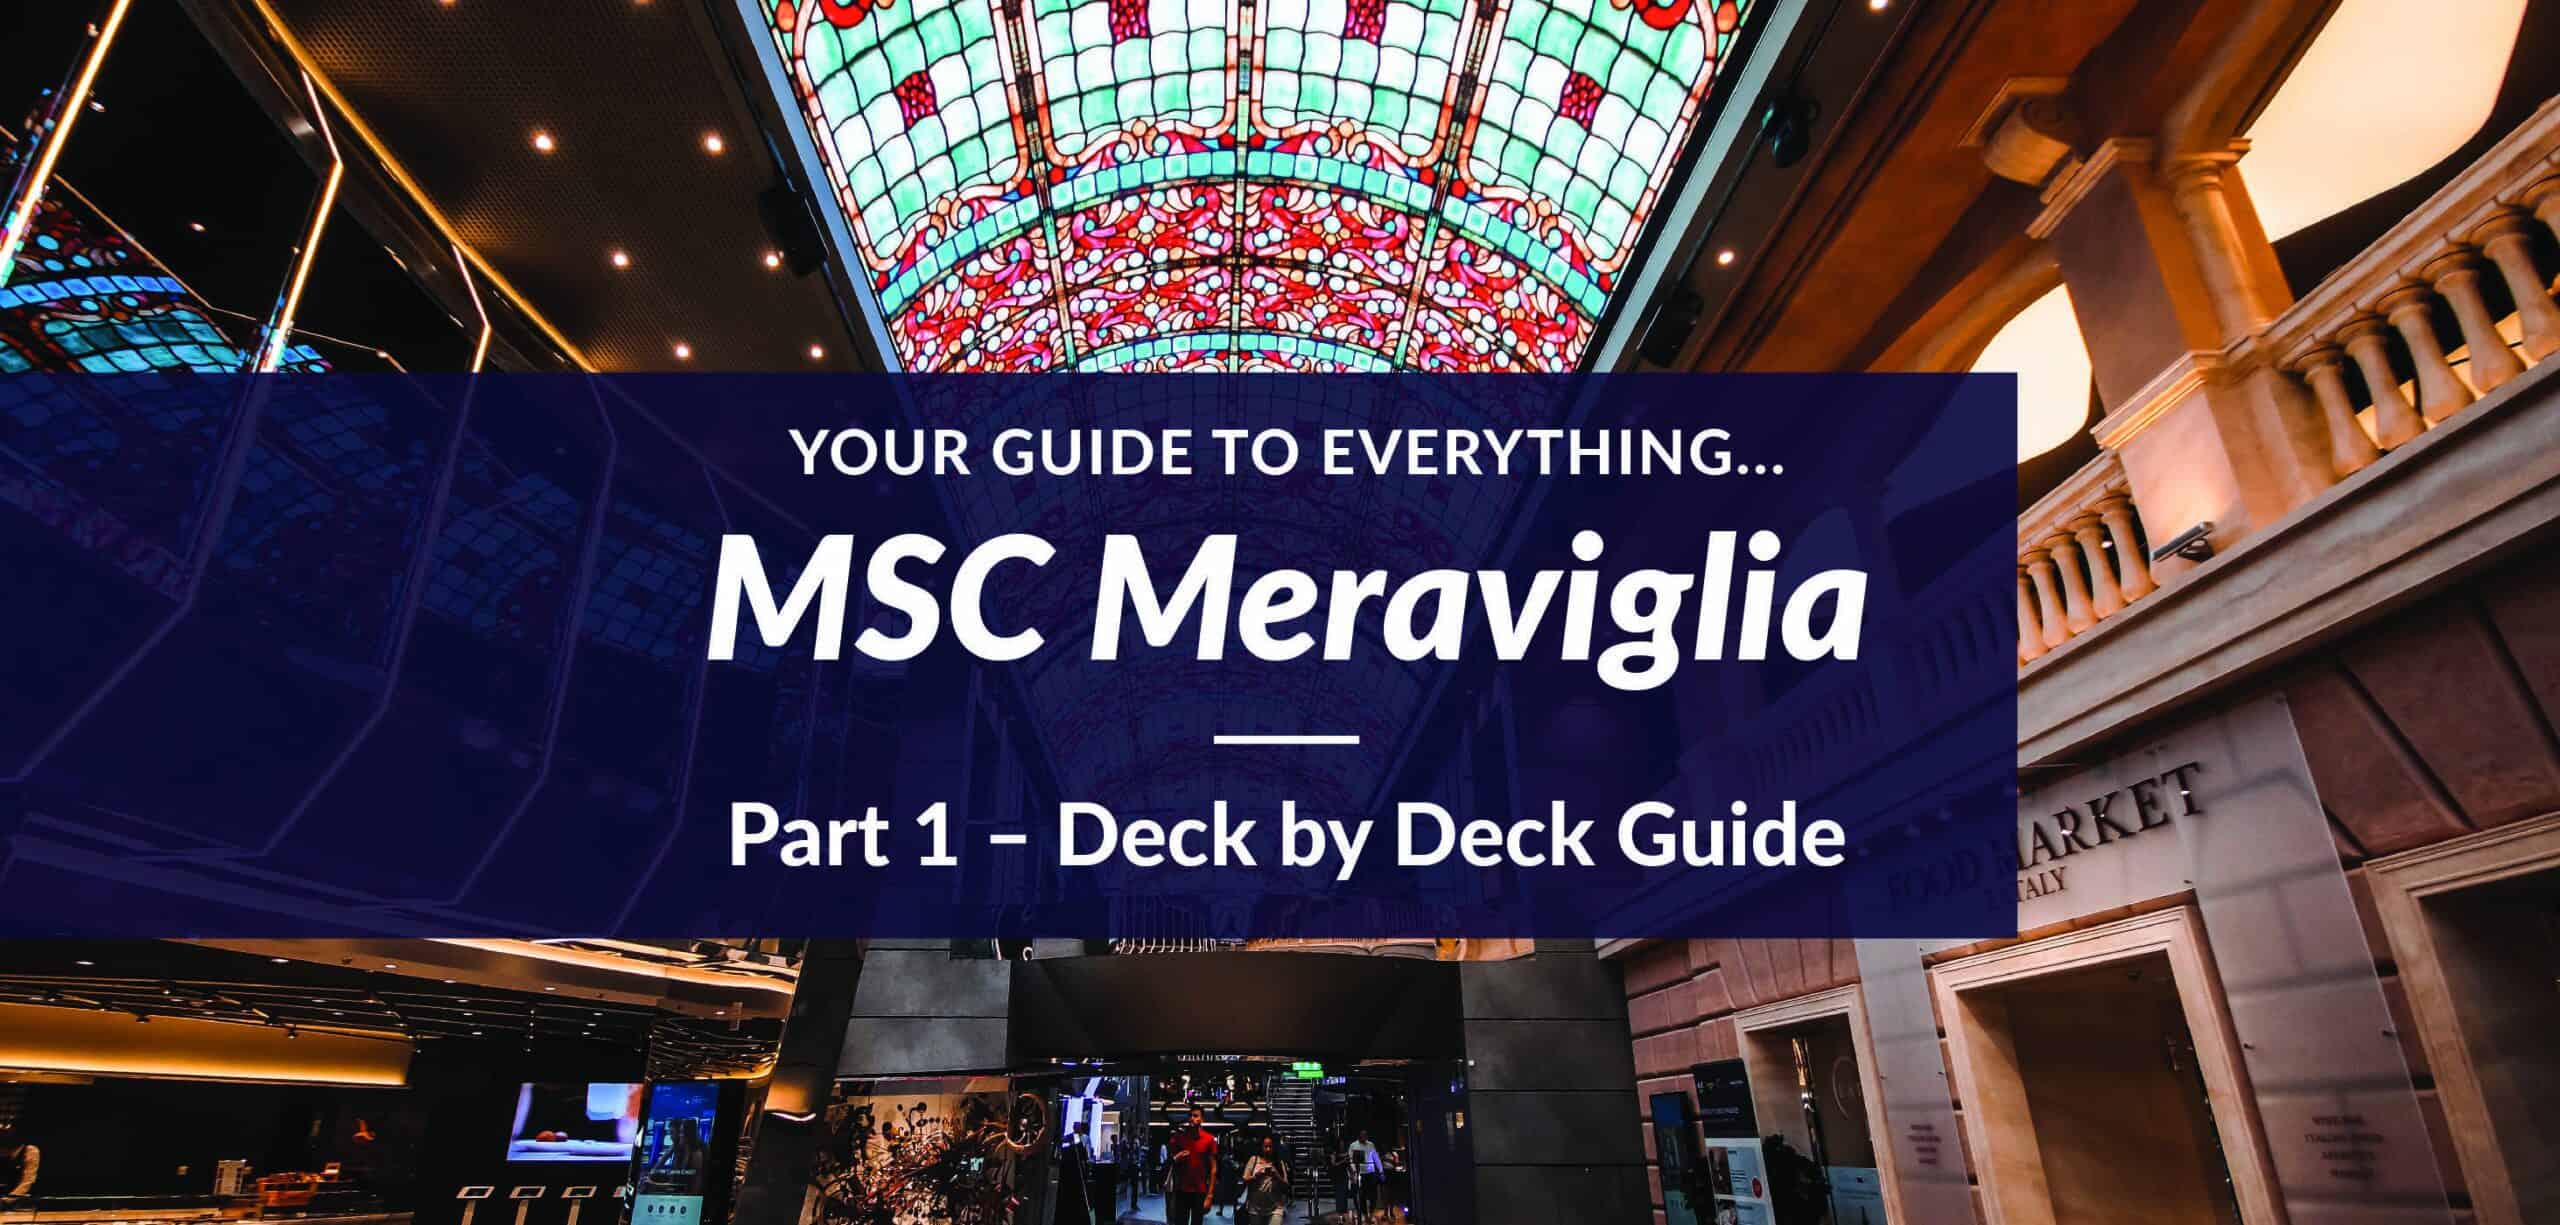 MSC Meraviglia - Part 1 - Deck by Deck Guide